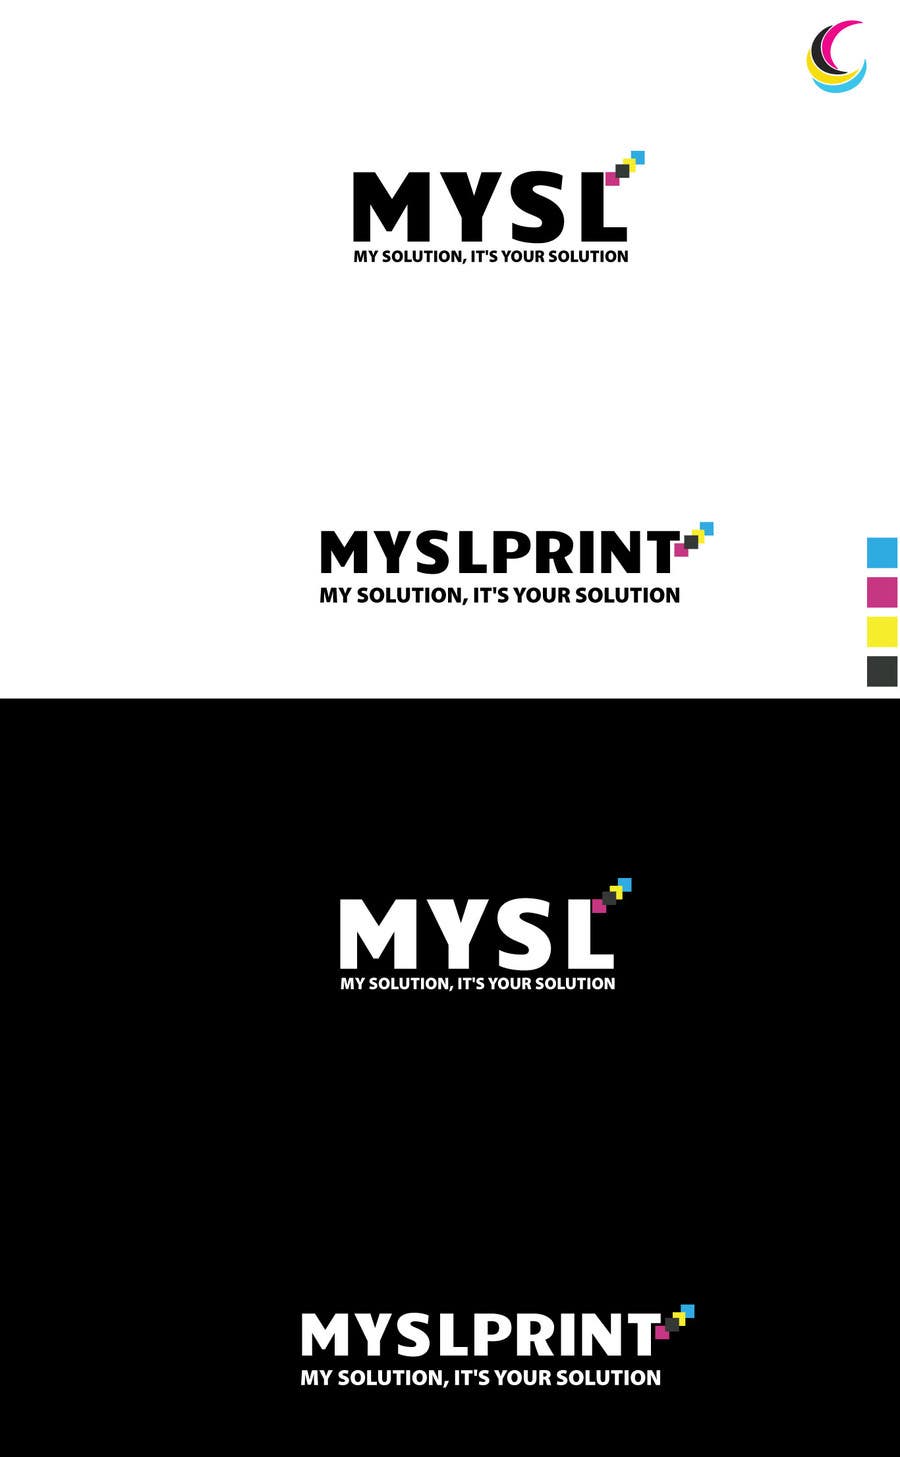 Penyertaan Peraduan #14 untuk                                                 Design a Logo for PRINTING company "MYSLprint"
                                            